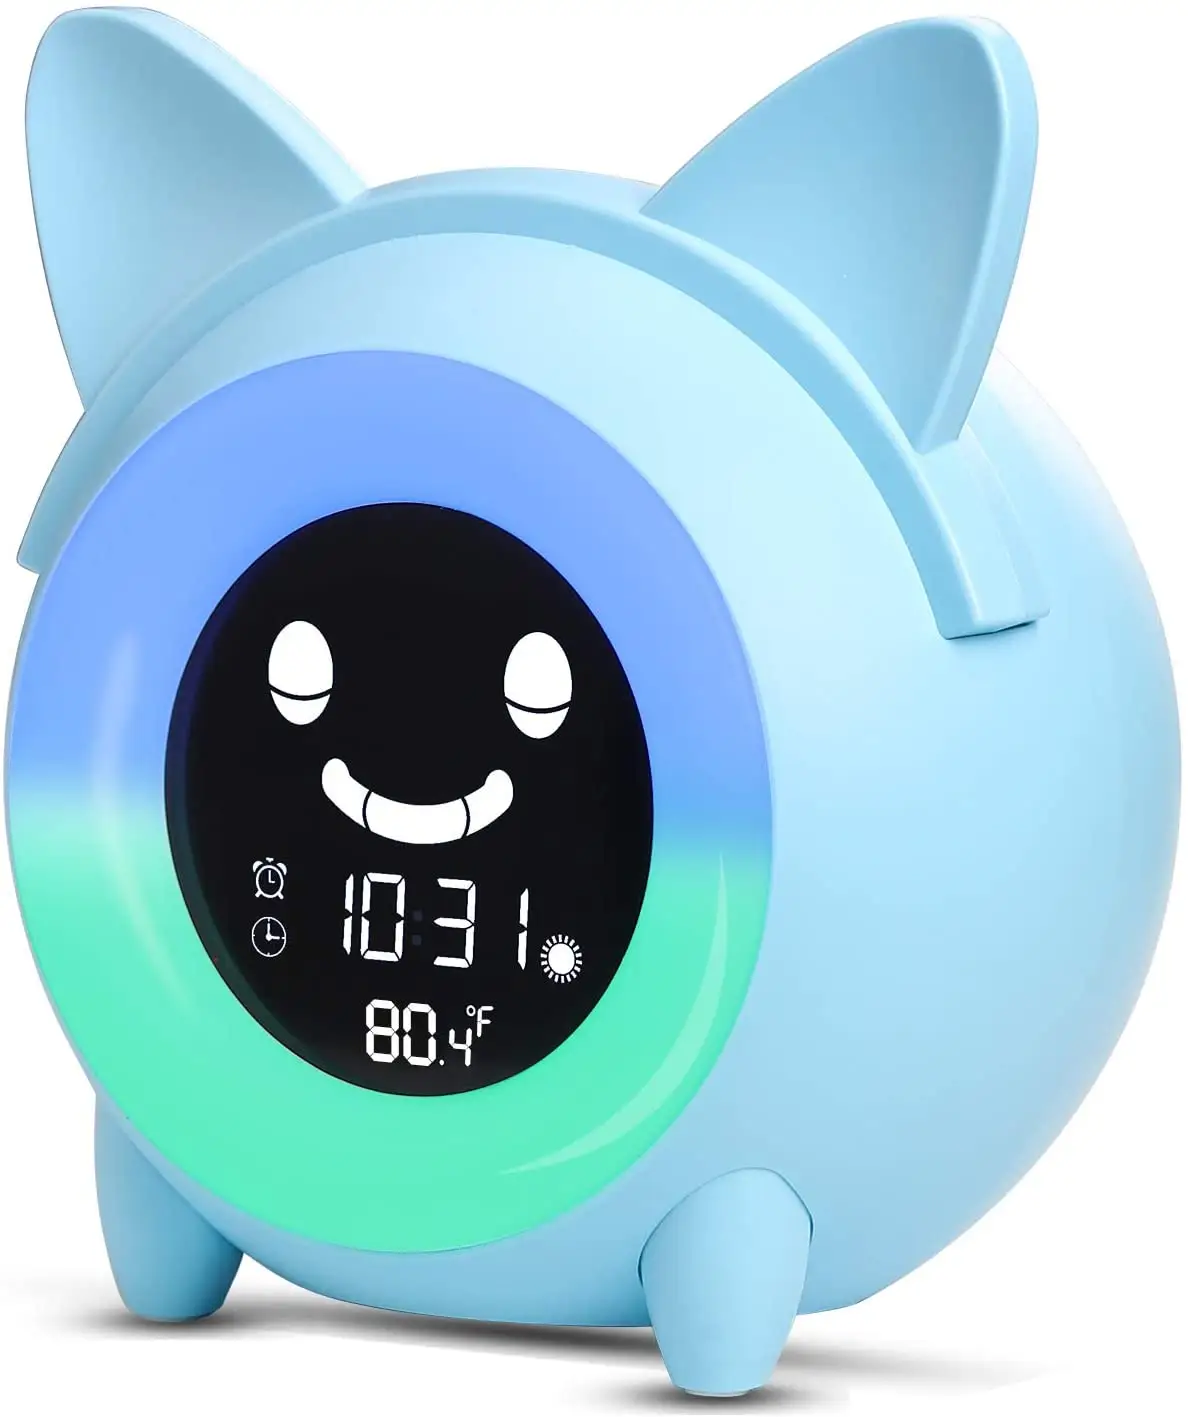 Windflyer toddlers Alarm Clock manual